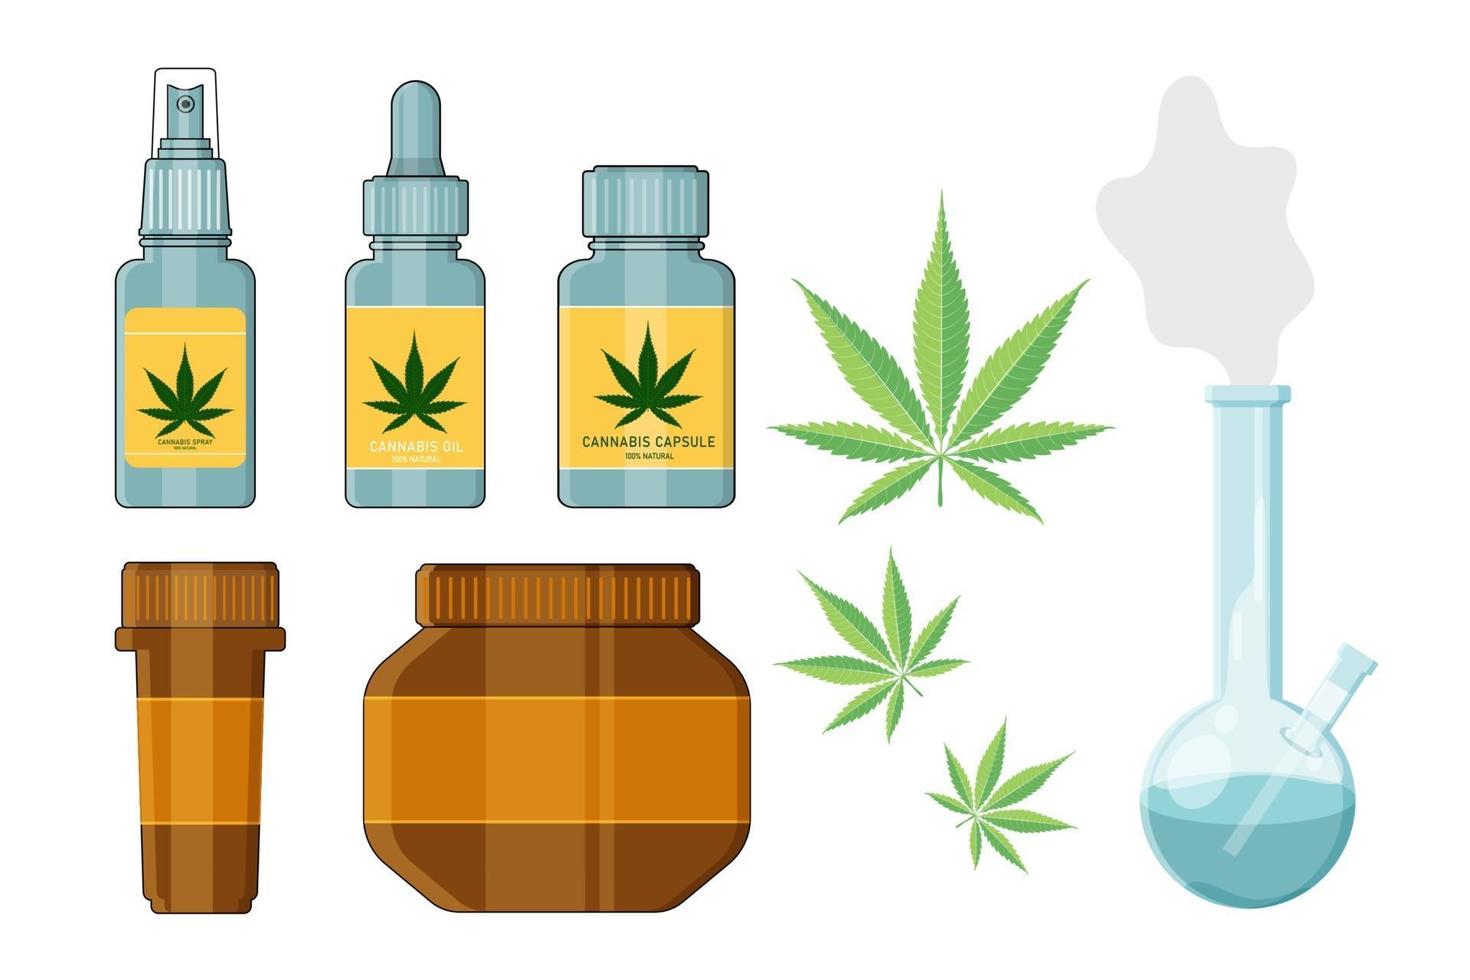 Formas de cannabis medicinal, set de marihuana. vector